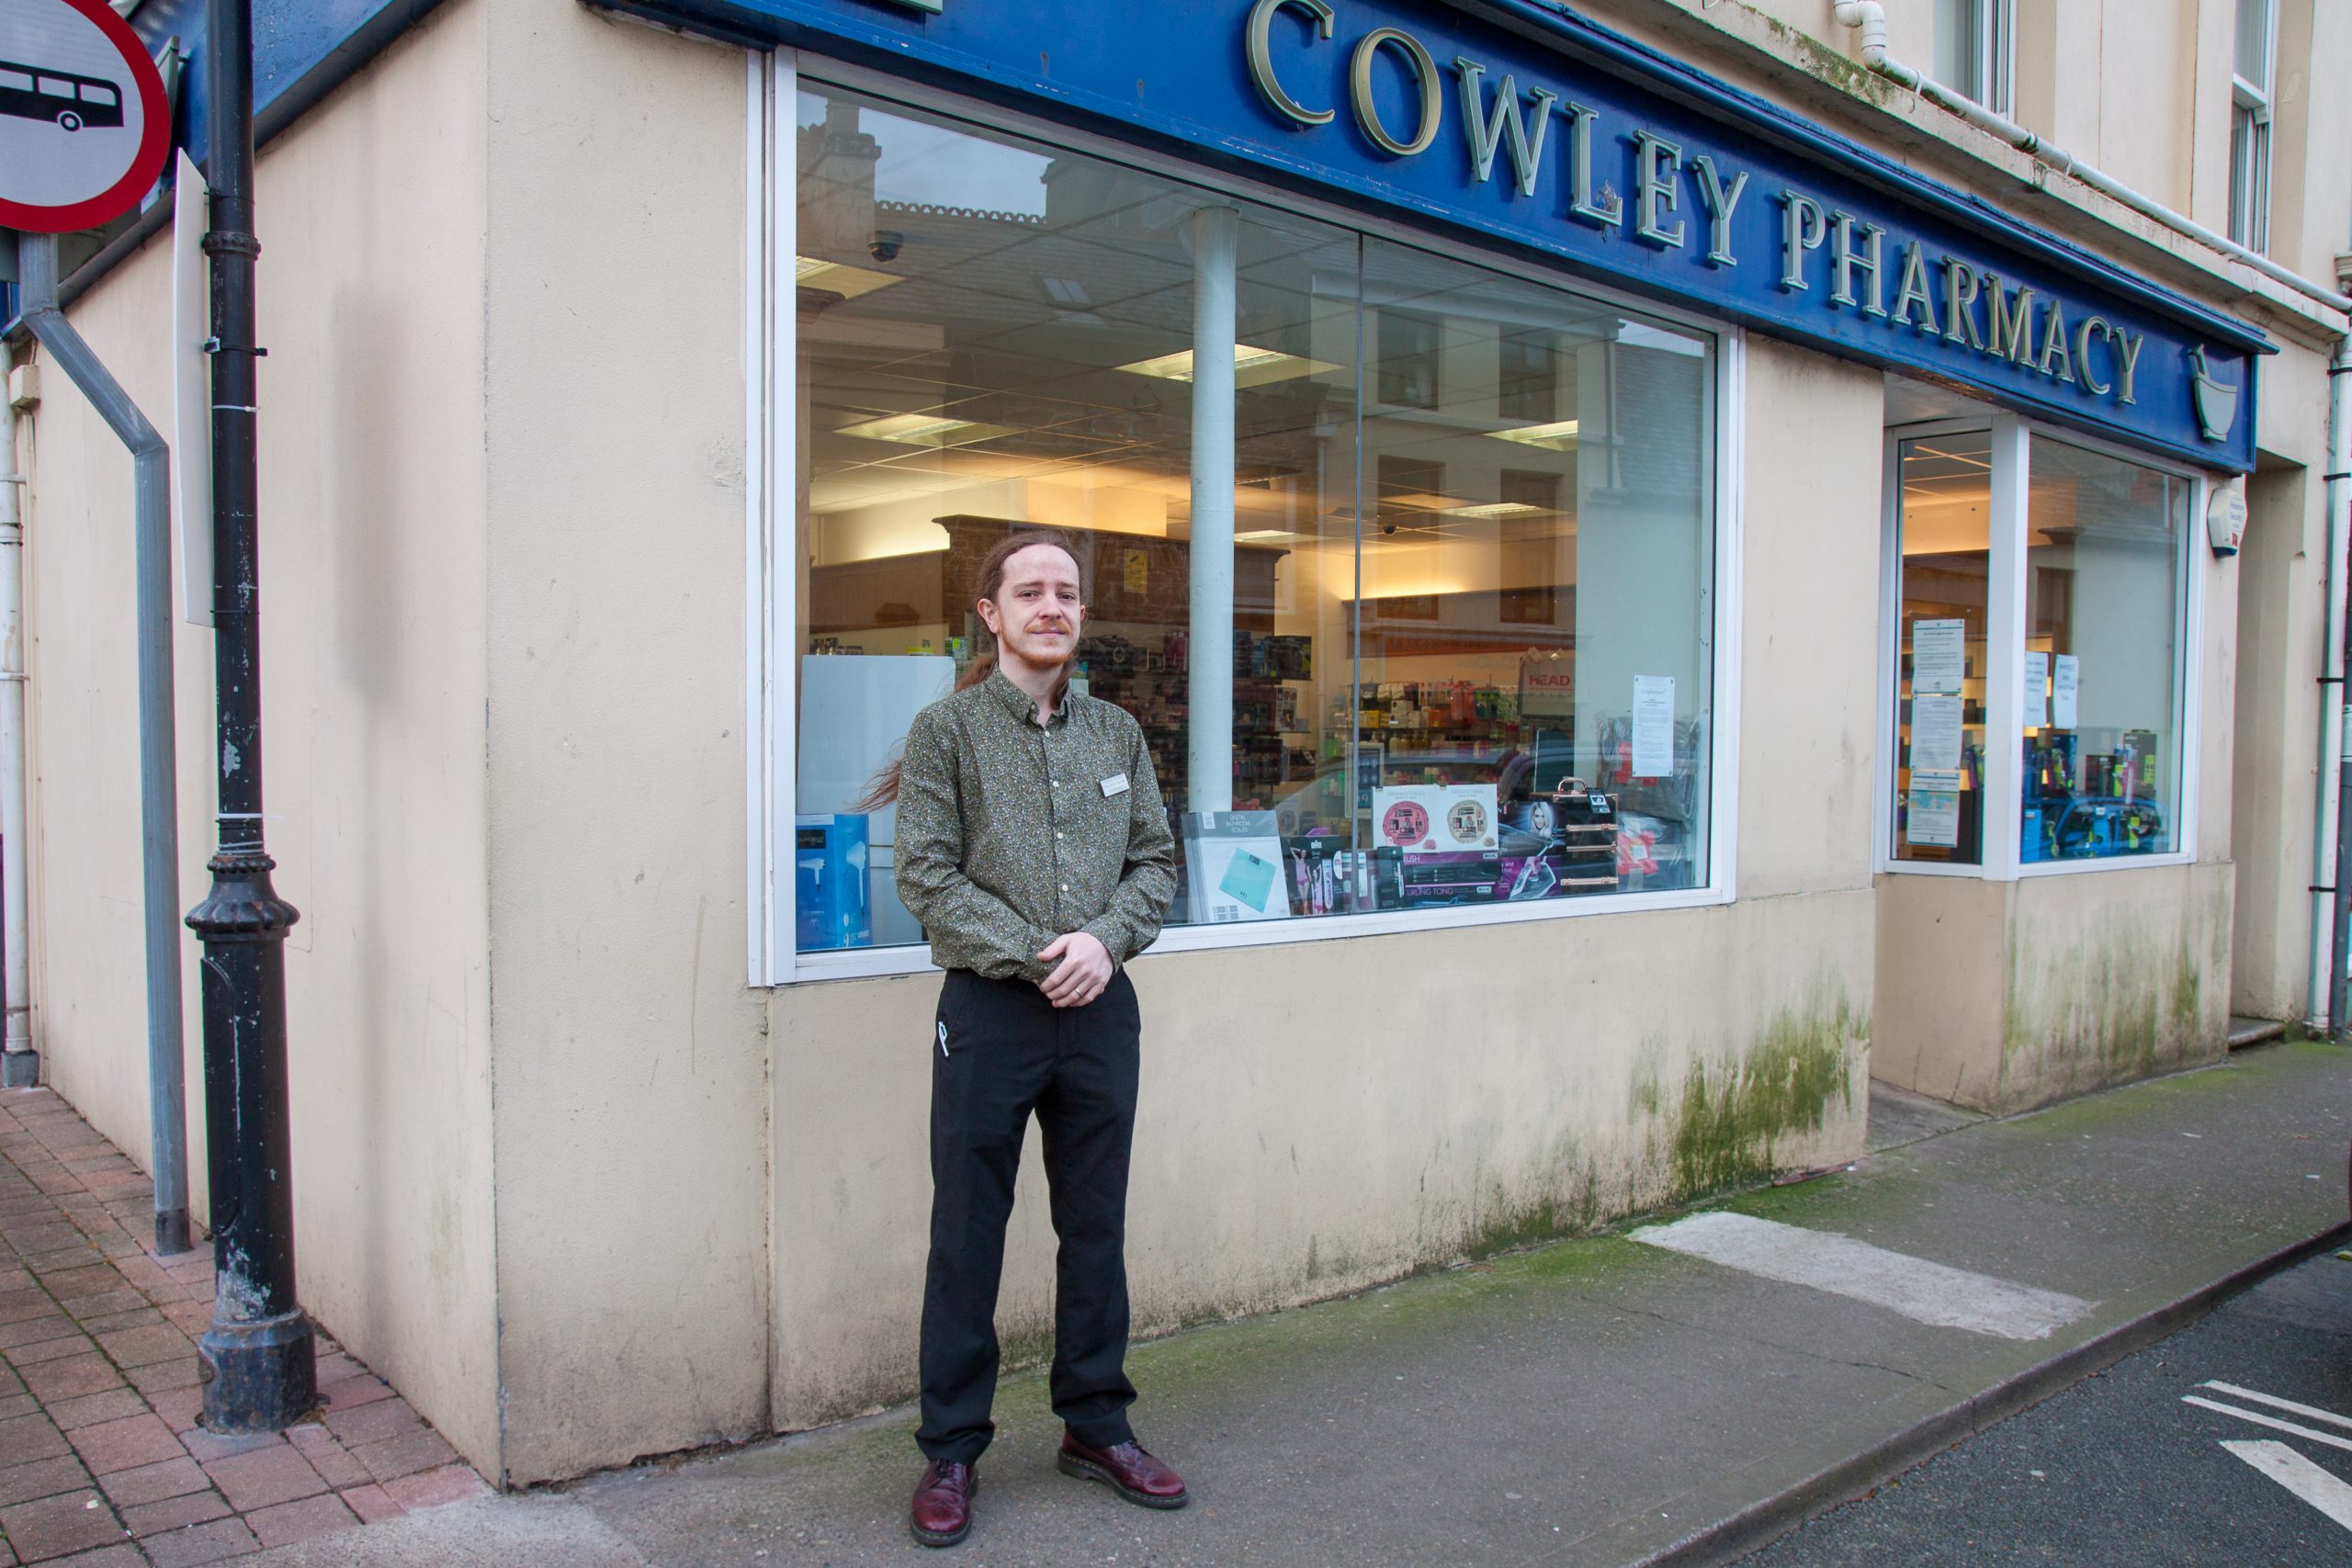 Cowley Pharmacy